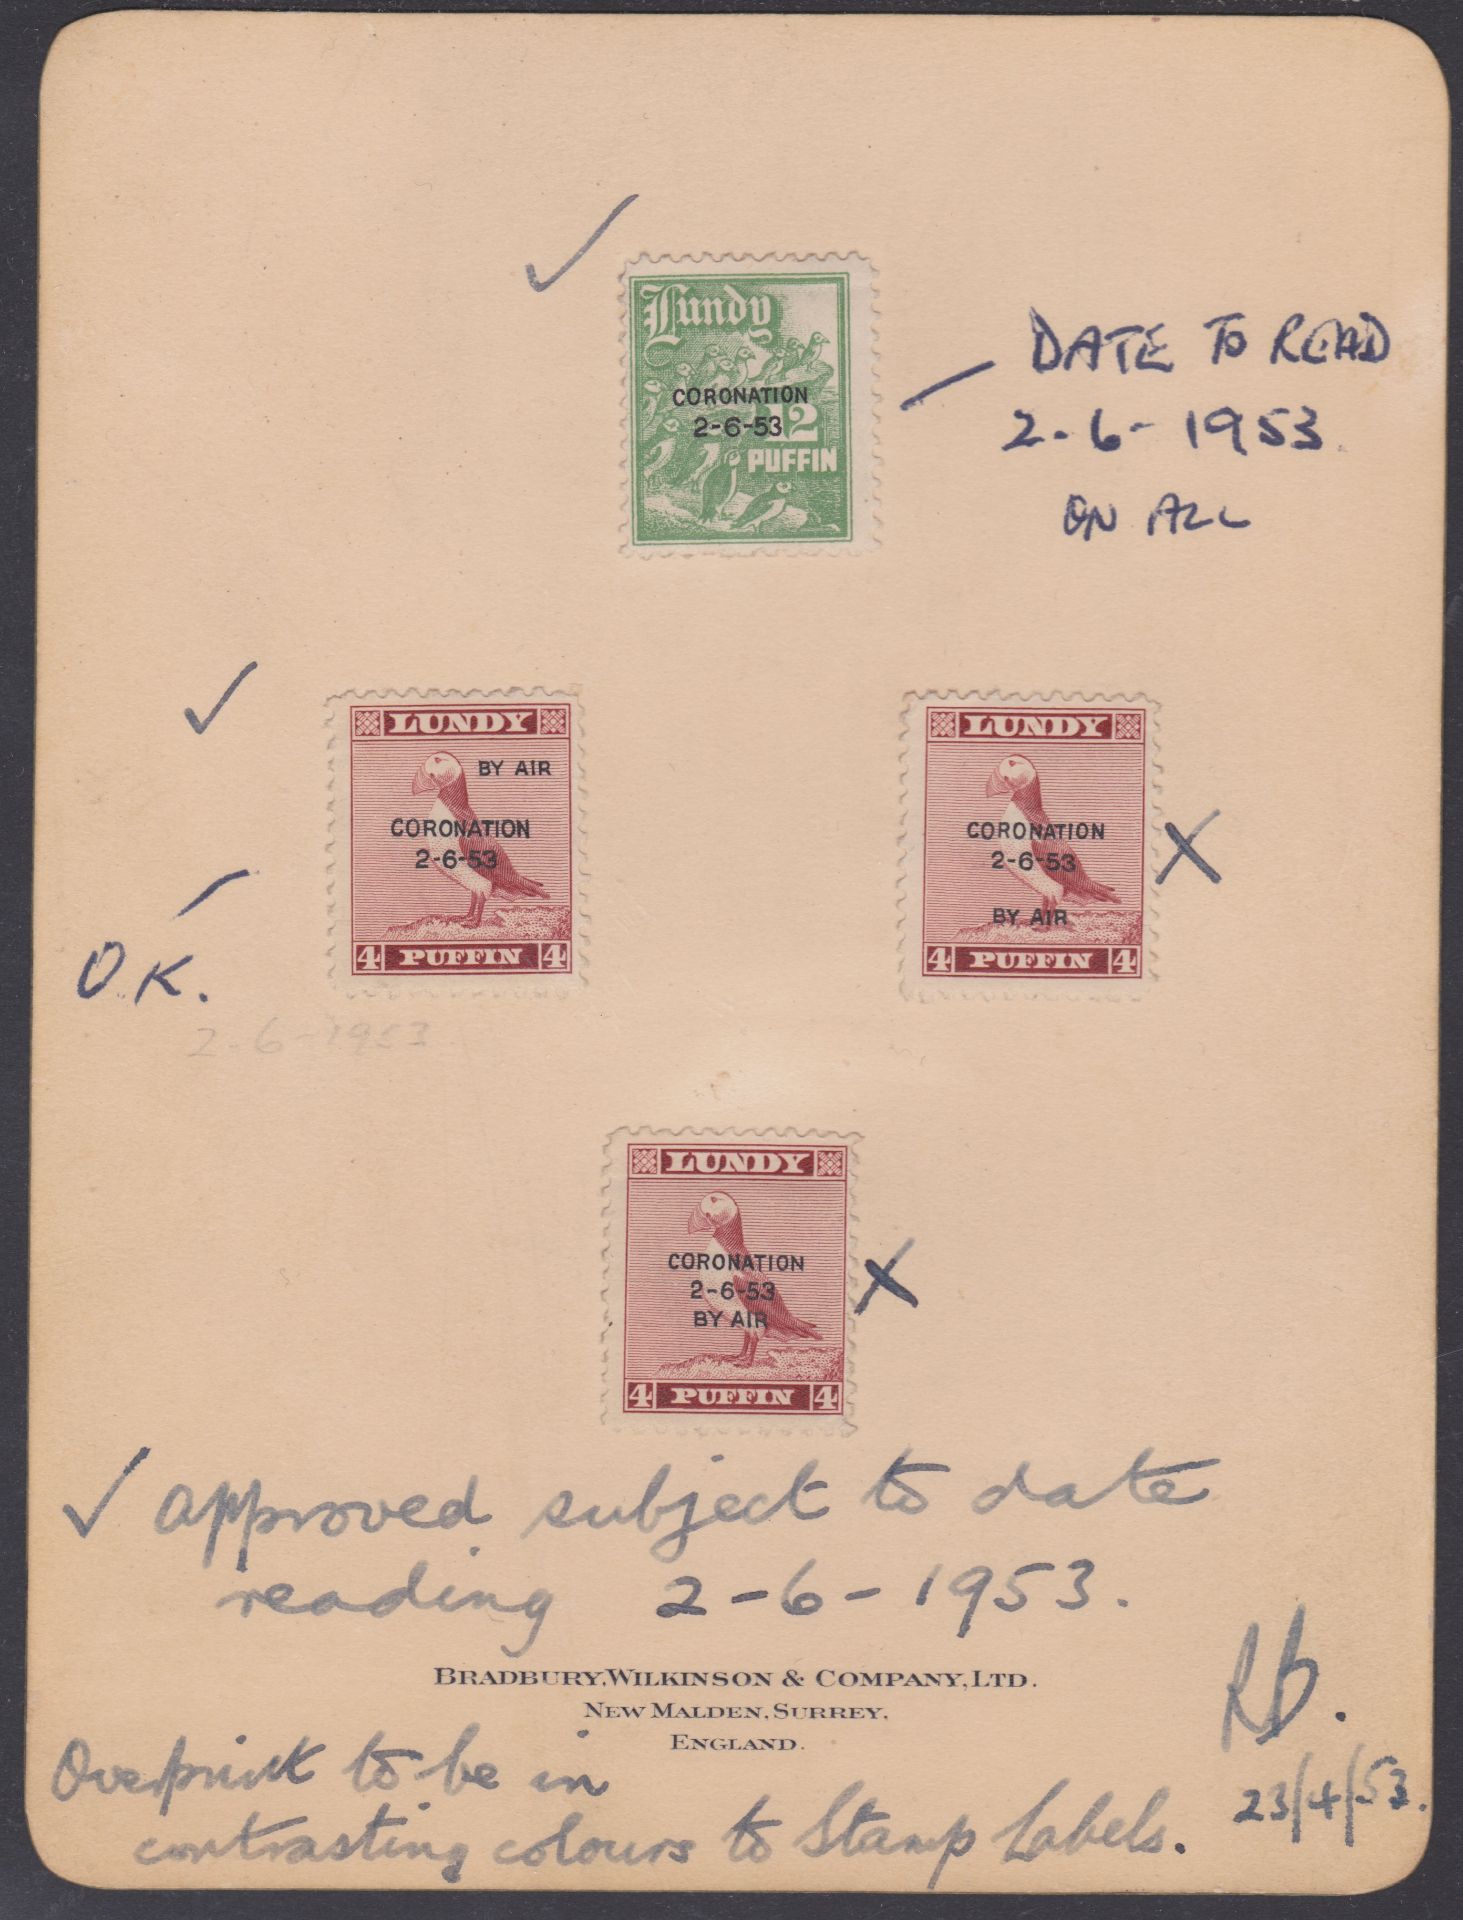 G.B. - LUNDY ISLAND - Coronation overprint issue, unadopted "CORONATION / 2-6-53" overprints in